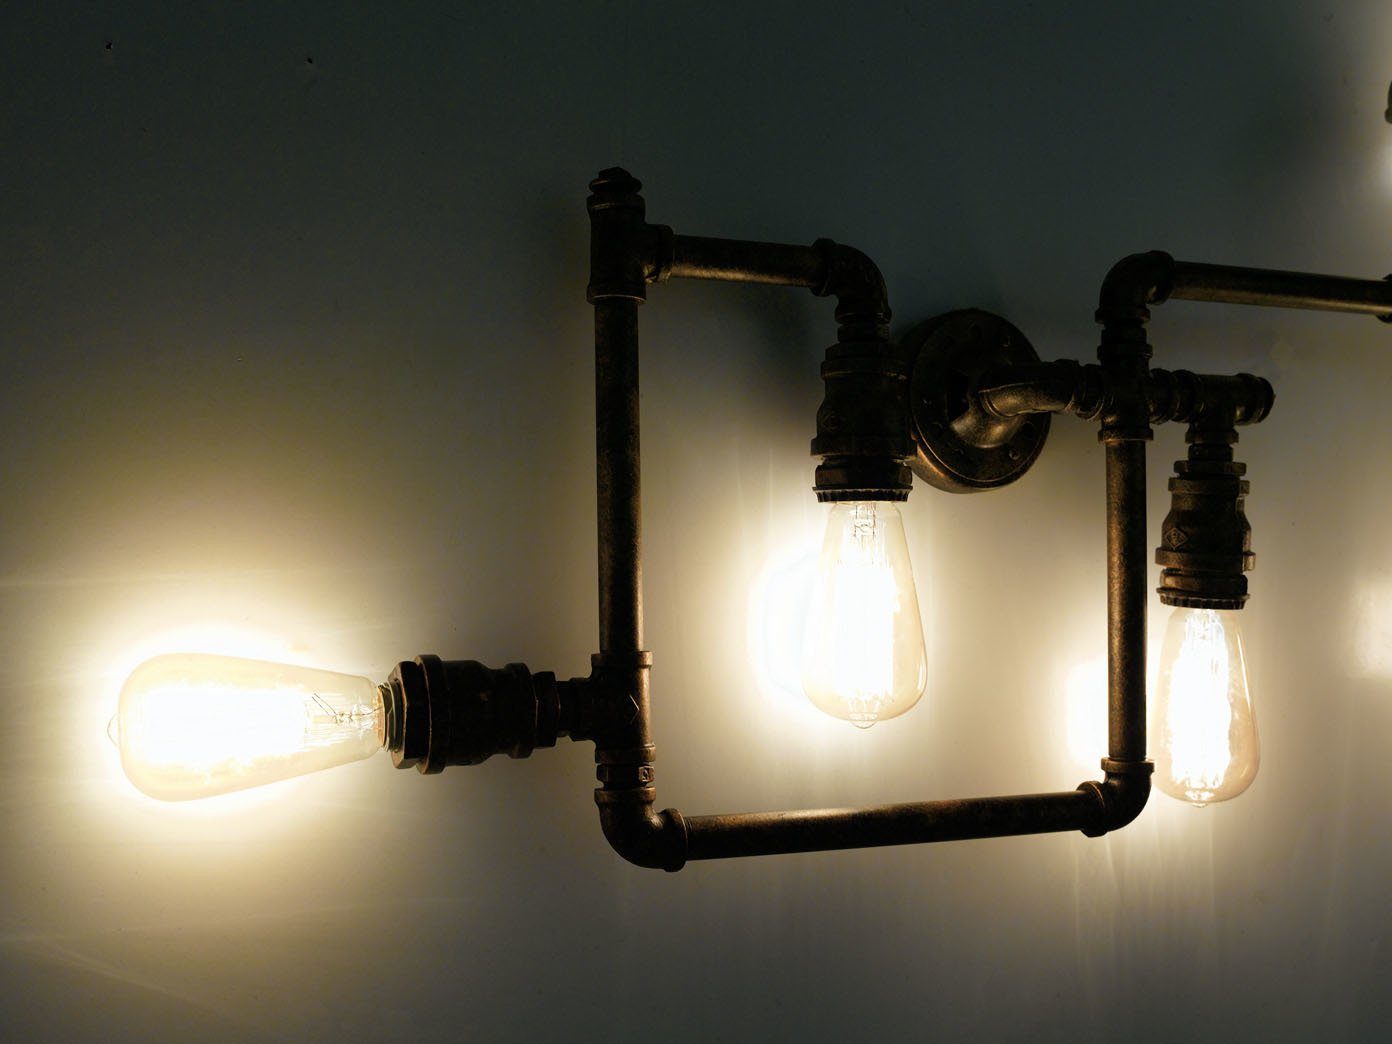 Rohr wechselbar, antik flach innen, Industrial LED ausgefallene Rost LUCE rost LED 114cm Treppenhaus Wandleuchte, Design Lampe warmweiß,